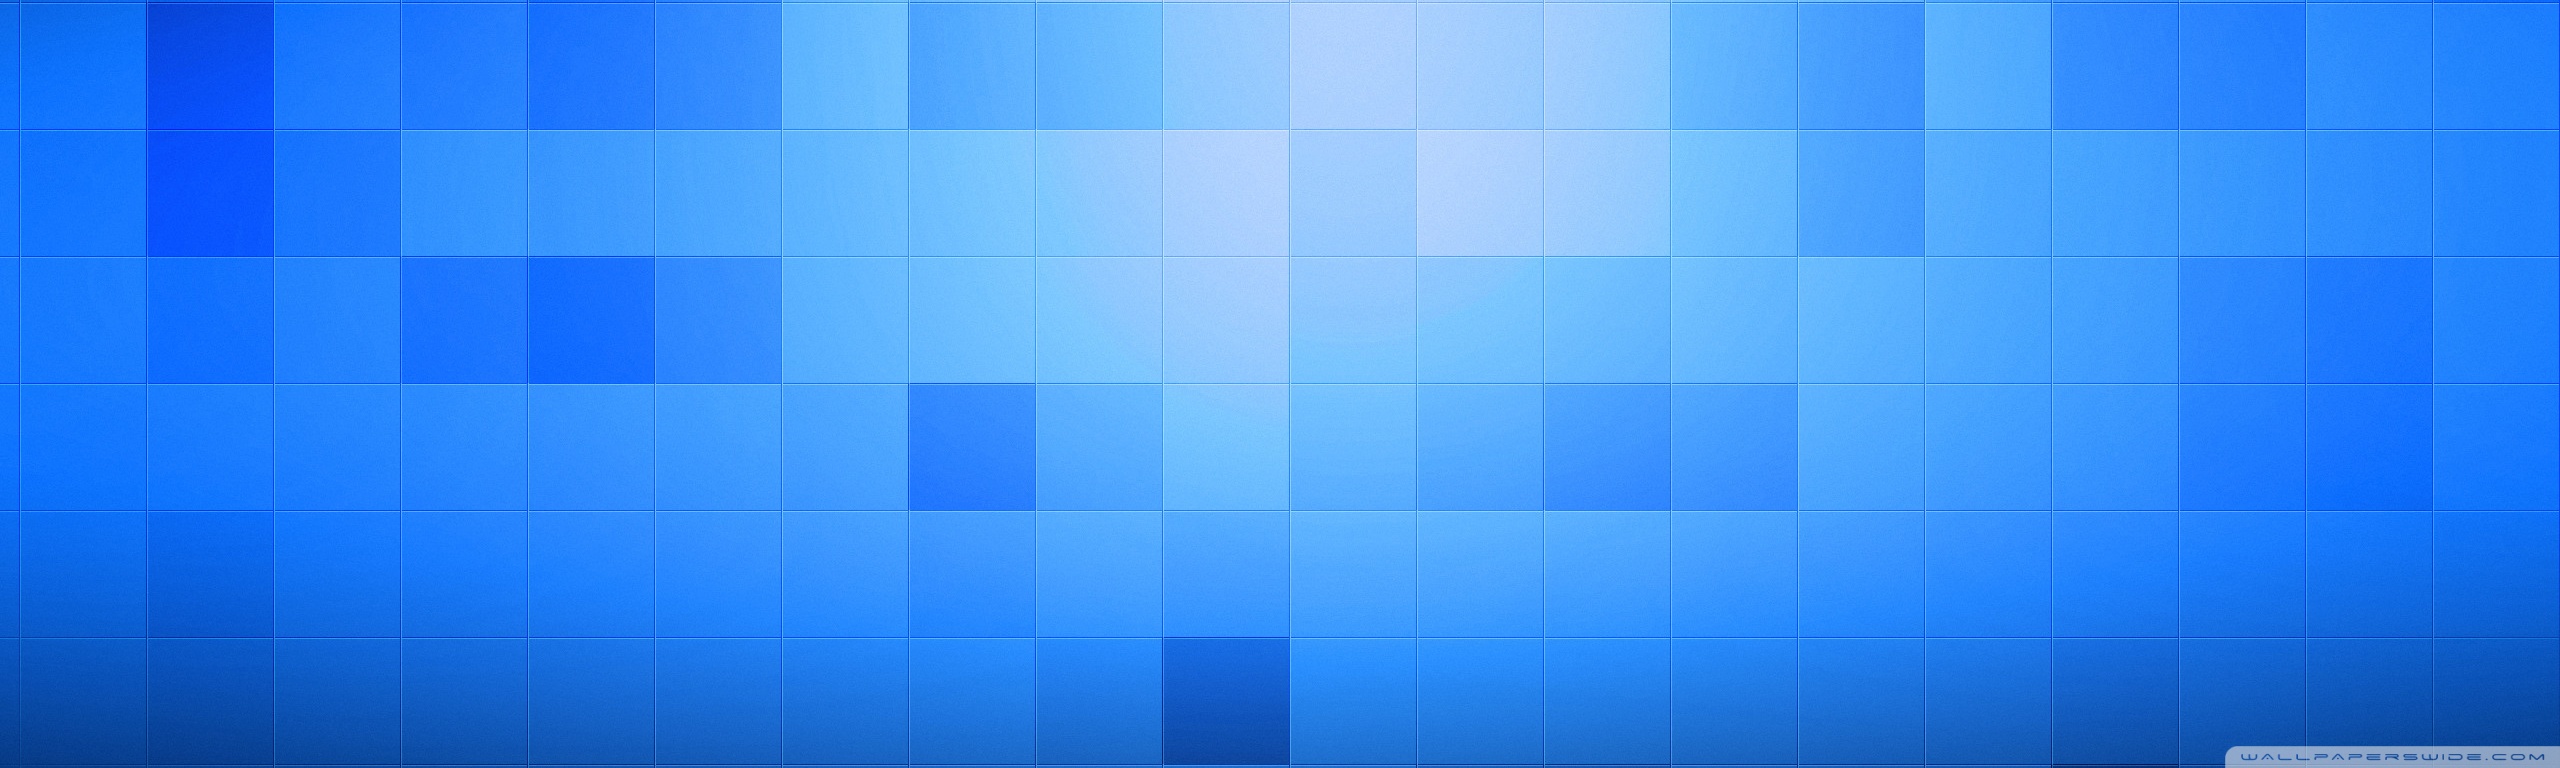 Blue Pixel Ultra HD Desktop Background Wallpaper for 4K UHD TV, Multi Display, Dual Monitor, Tablet